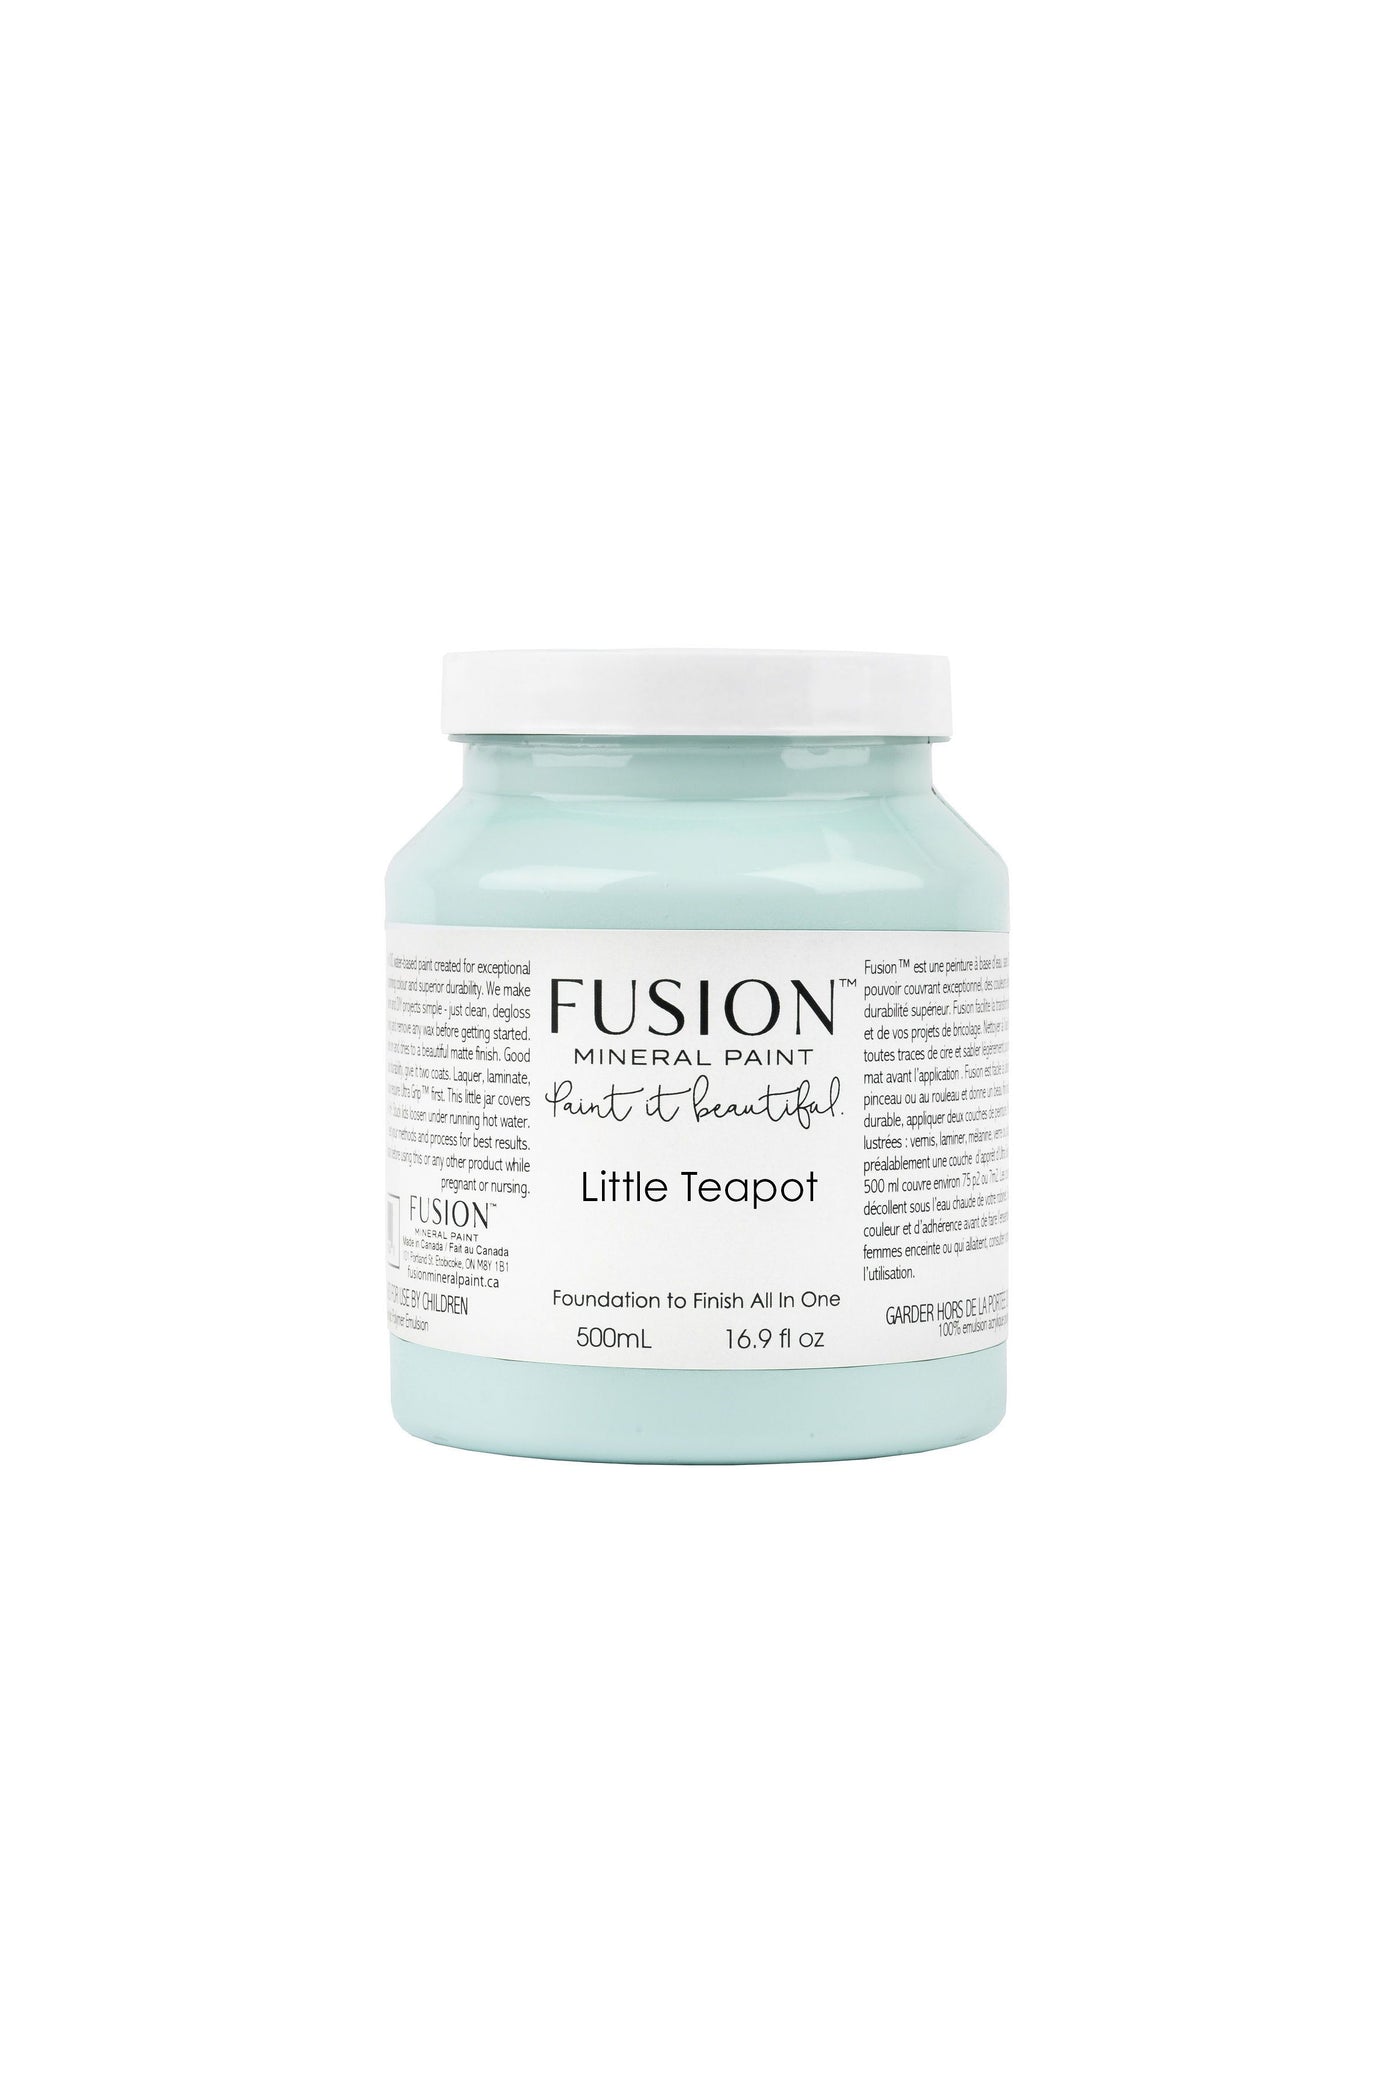 Fusion Mineral Paint - LITTLE TEAPOT soft teal blue 500ml